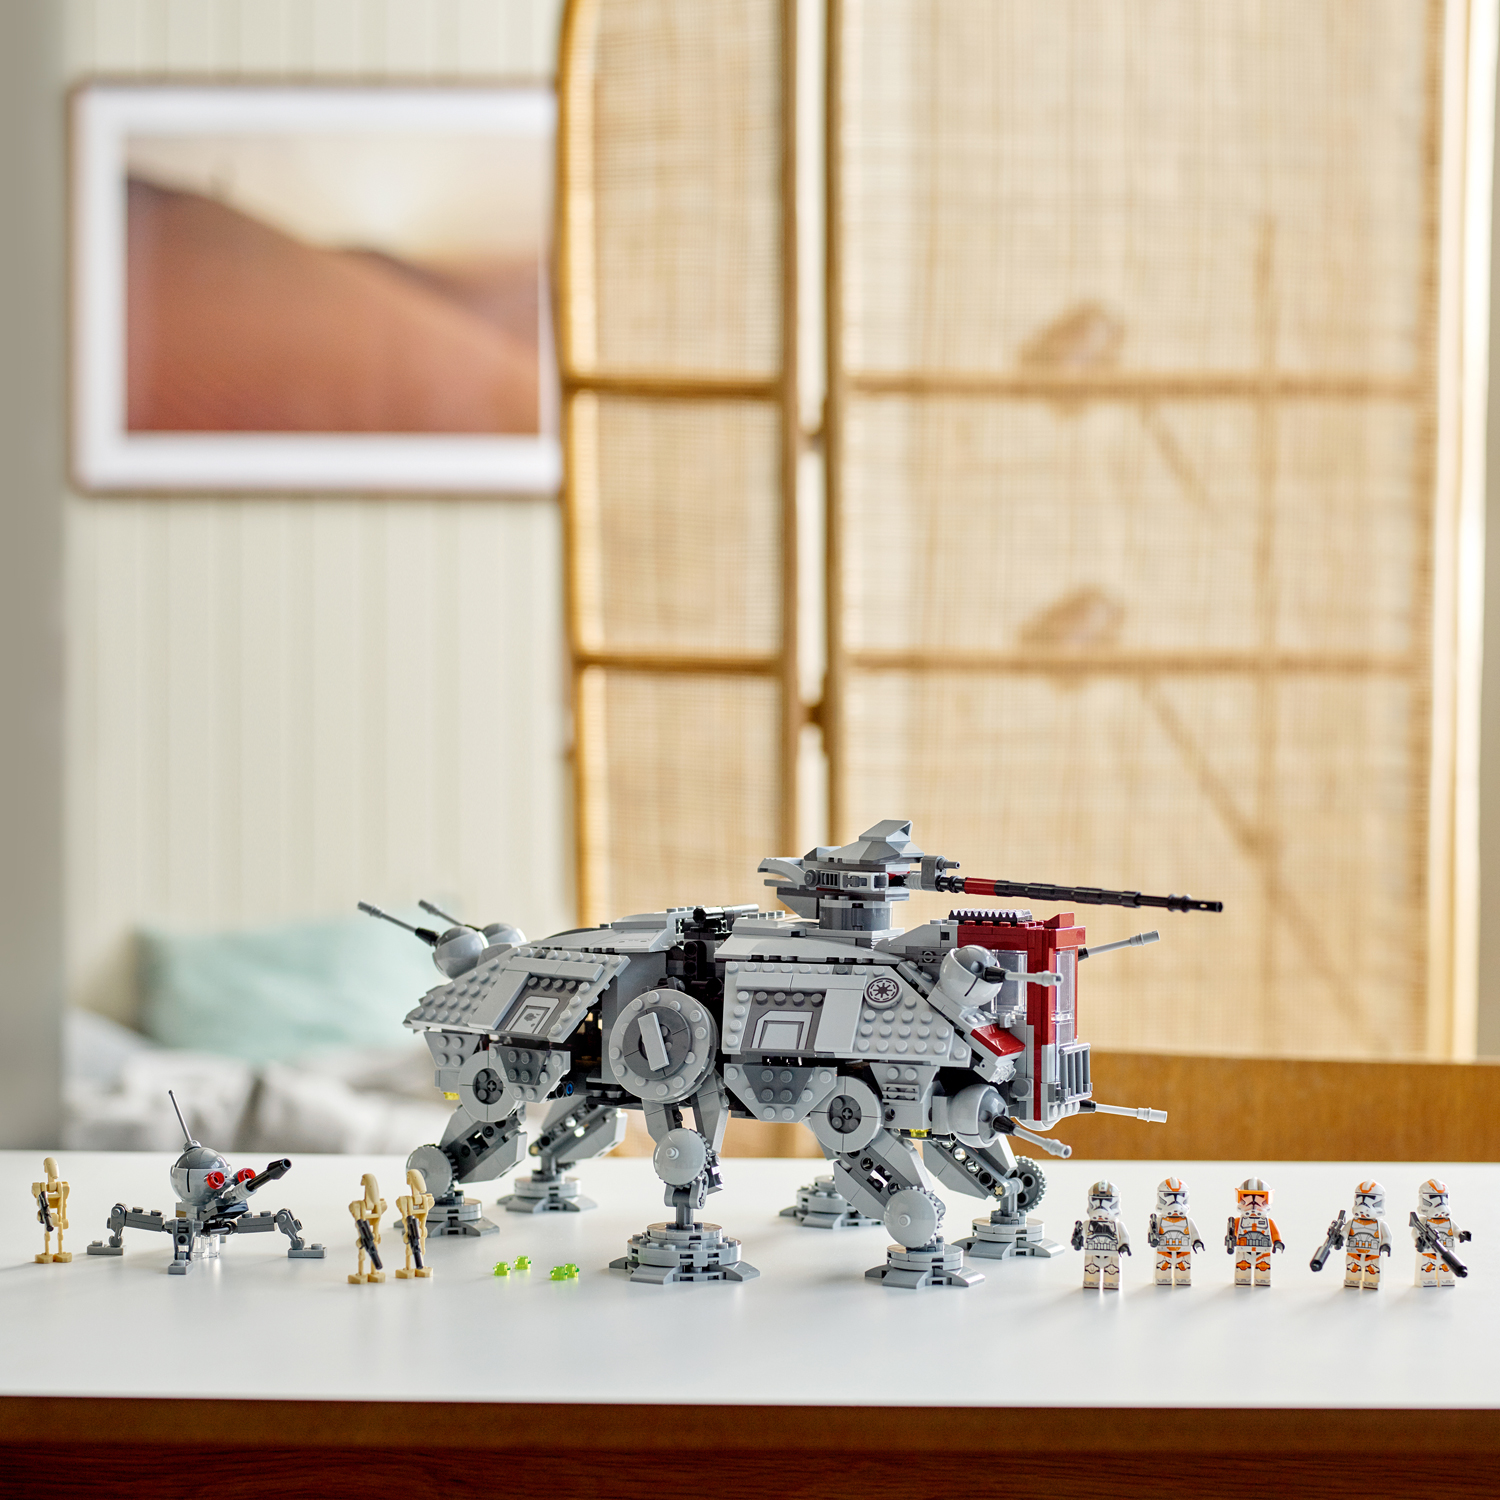 LEGO Star Wars - AT-TE Walker 75337